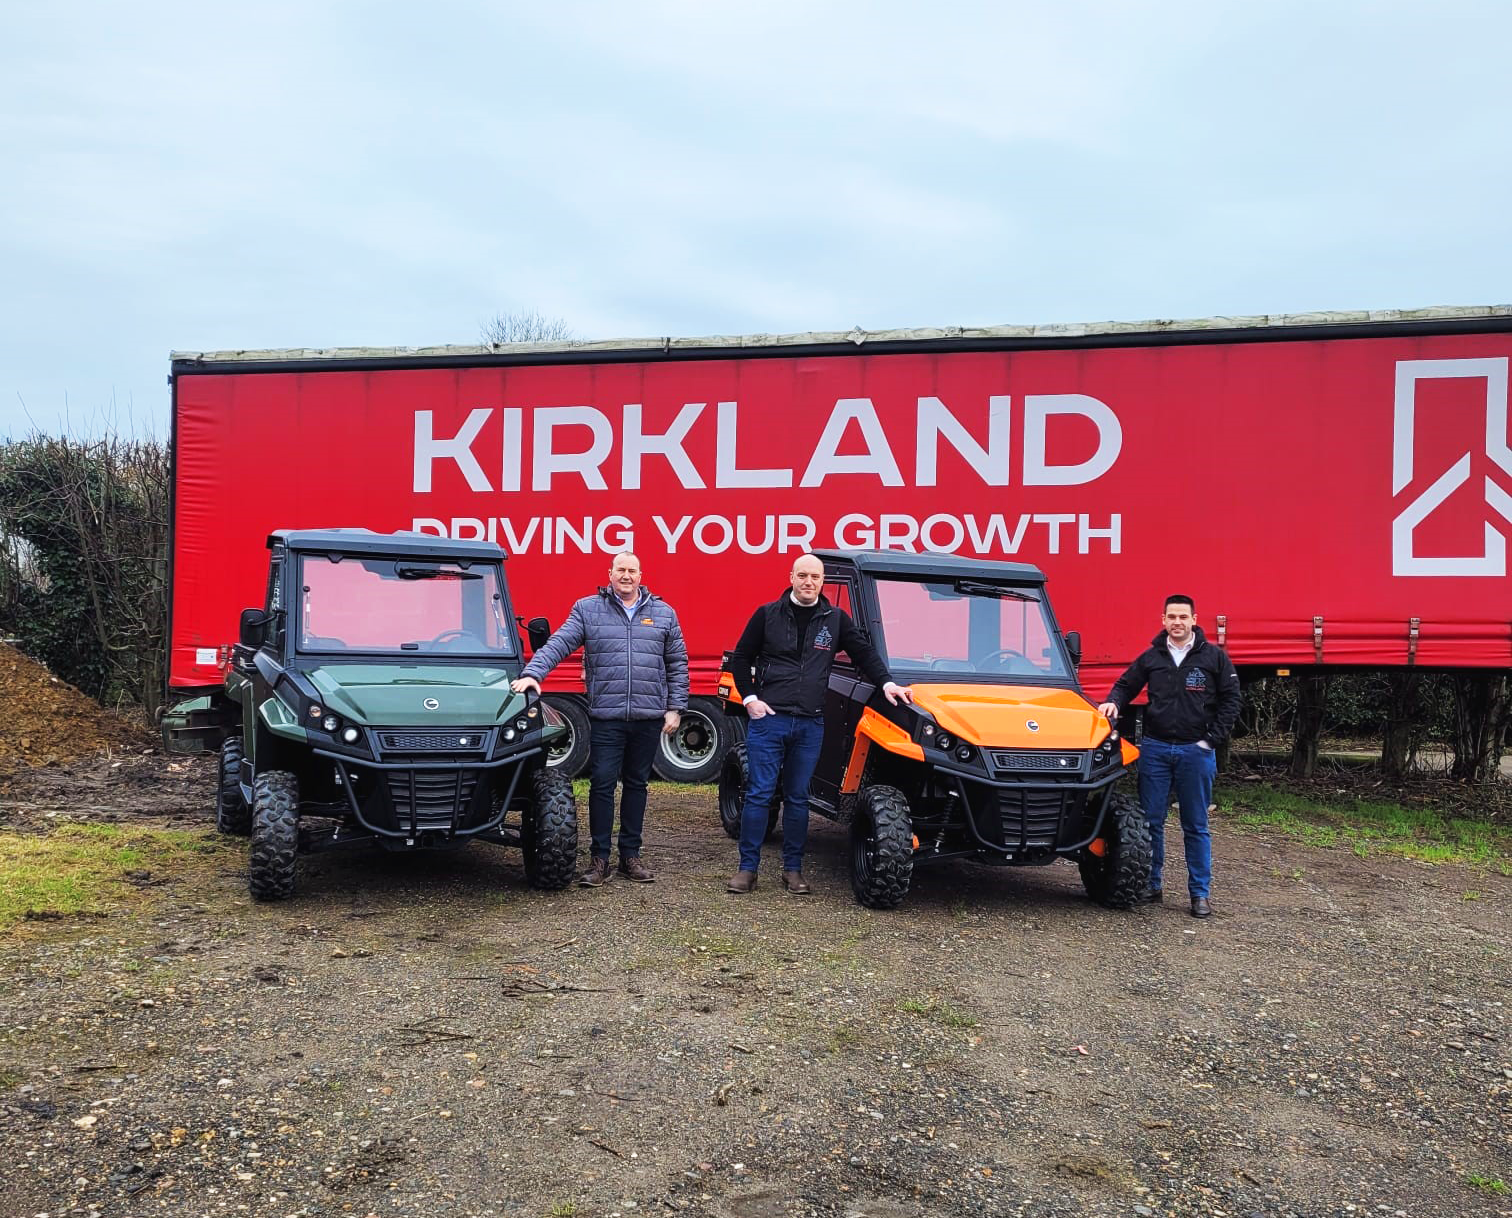 Kirkland UK CORVUS Dealers